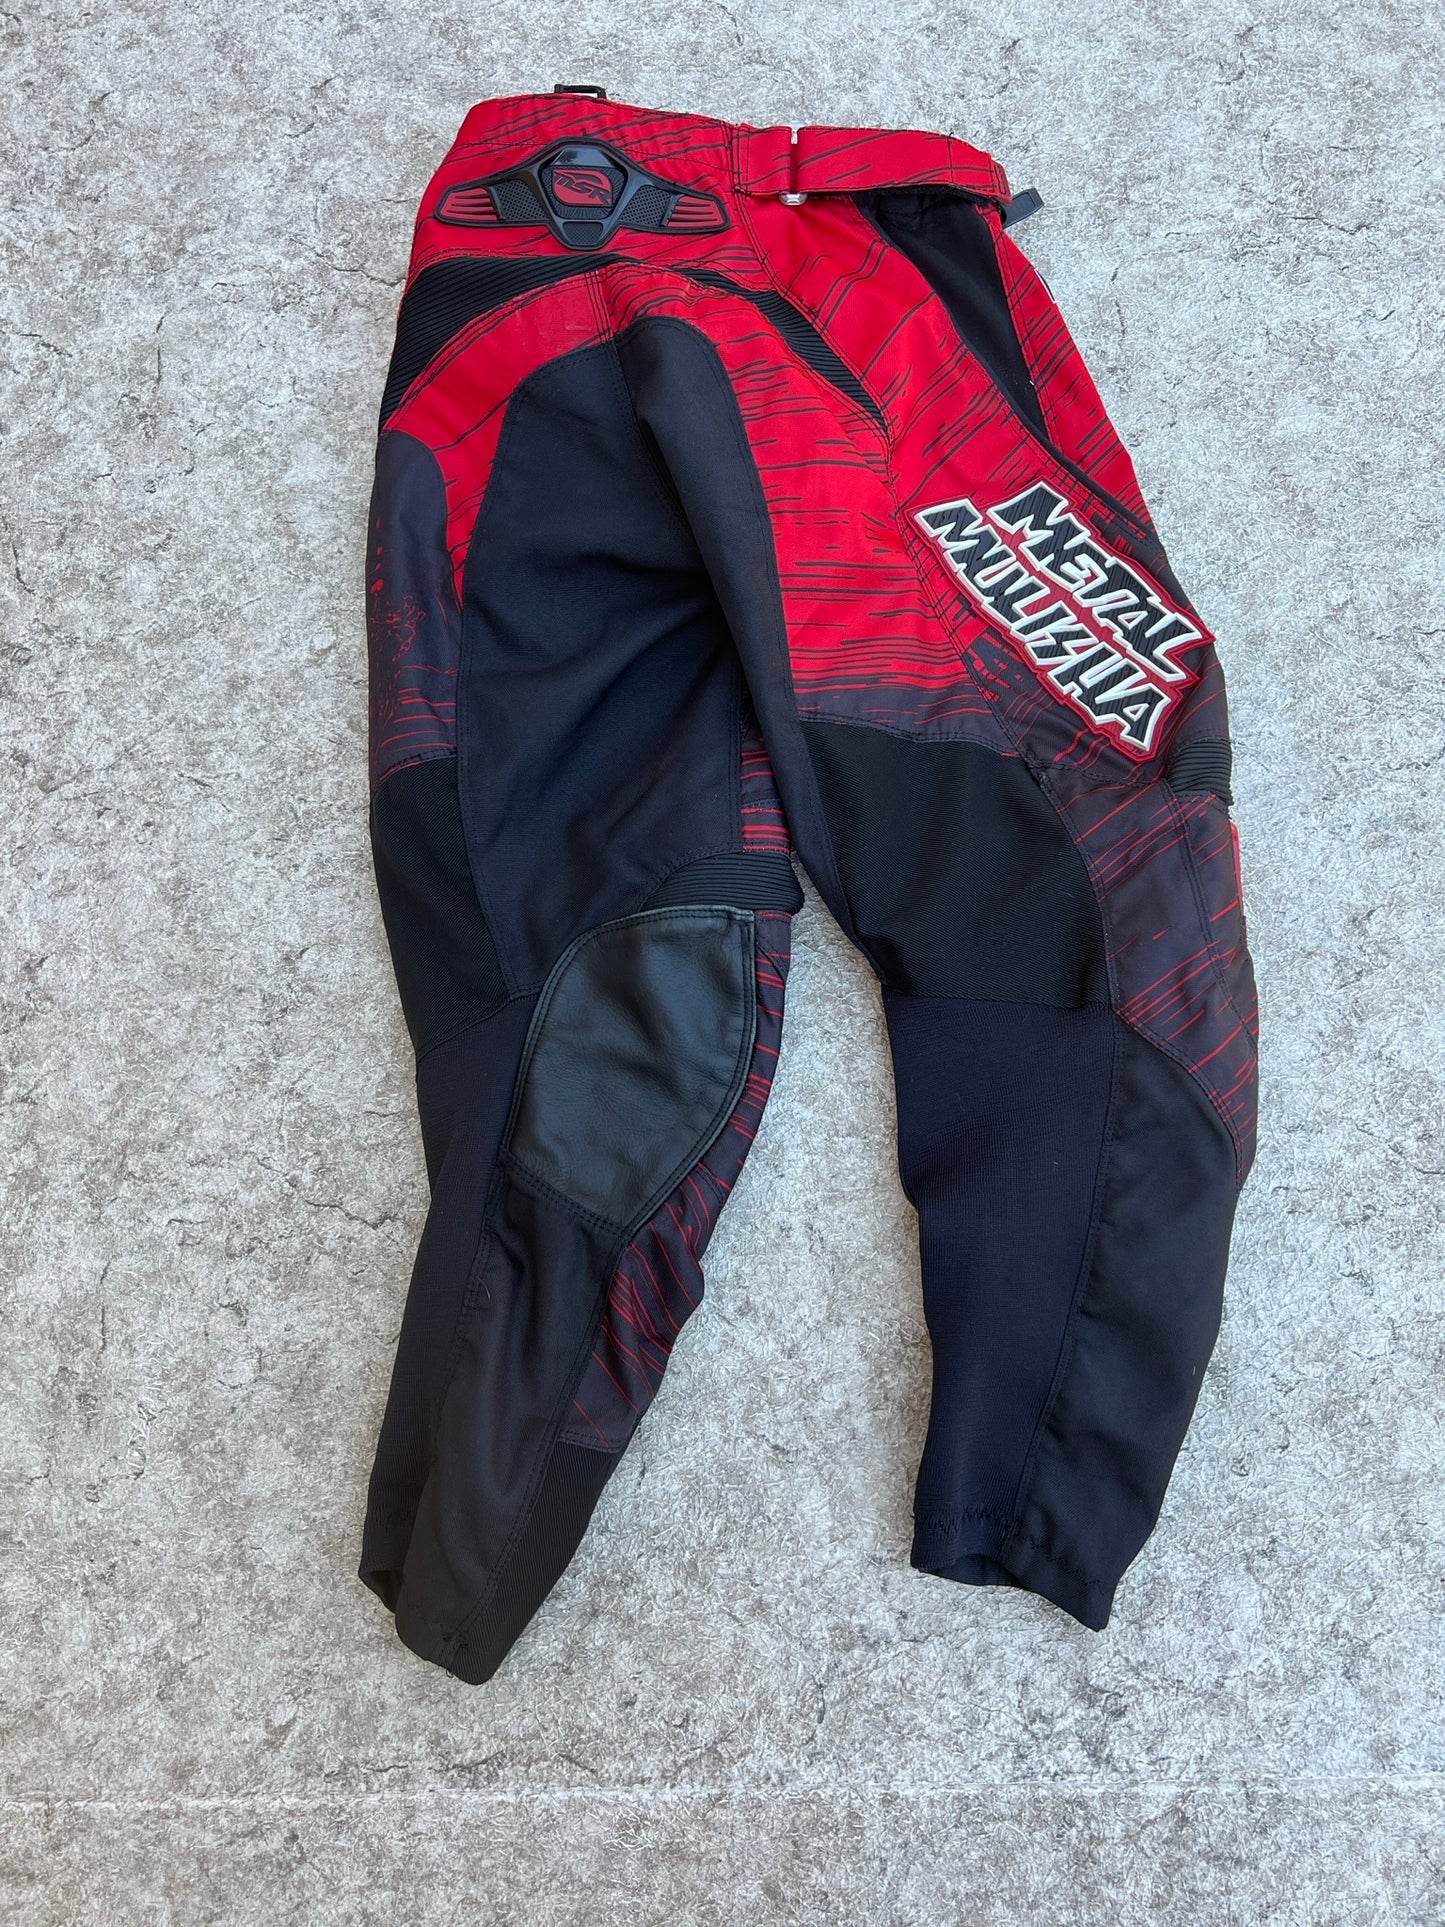 Motocross BMX Dirt Bike Child Size Junior 28-30 Inch Metal Mulisha Black Red Excellent